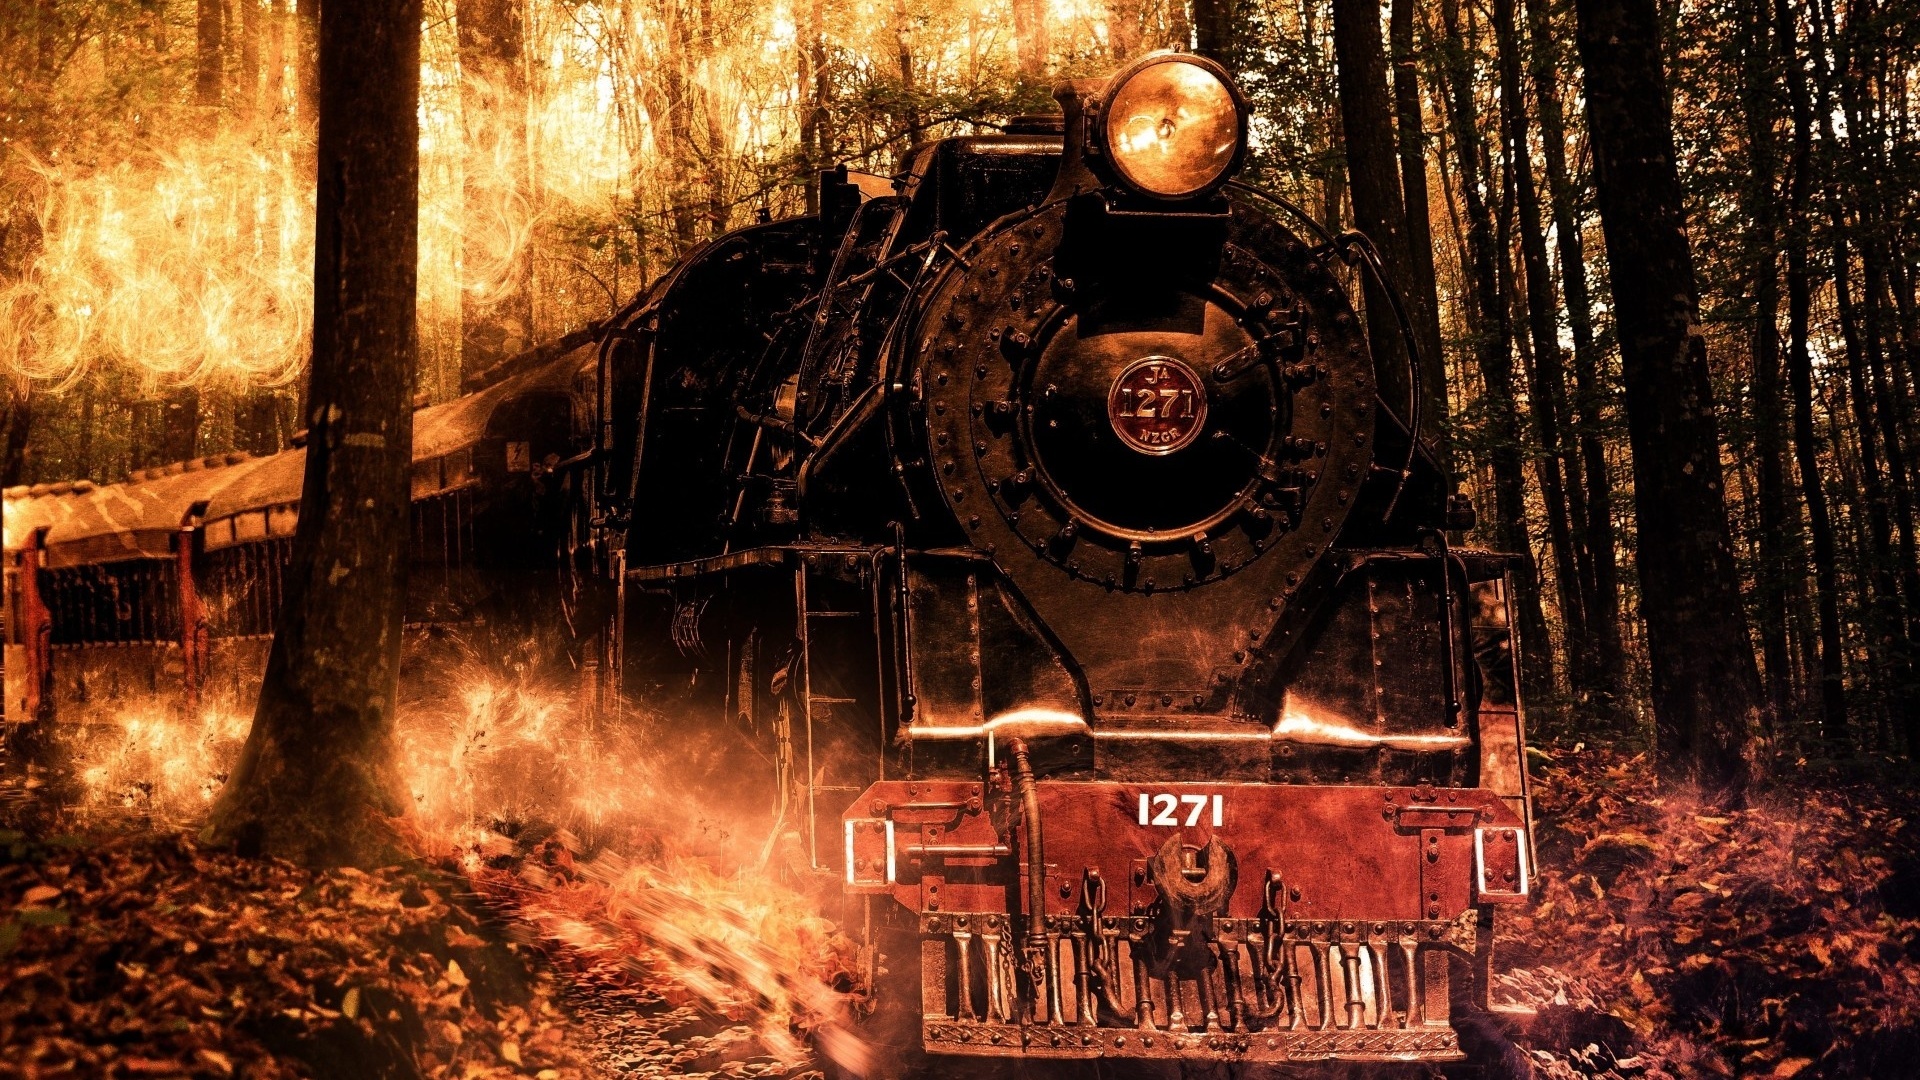 locomotive, tree, railroad, train